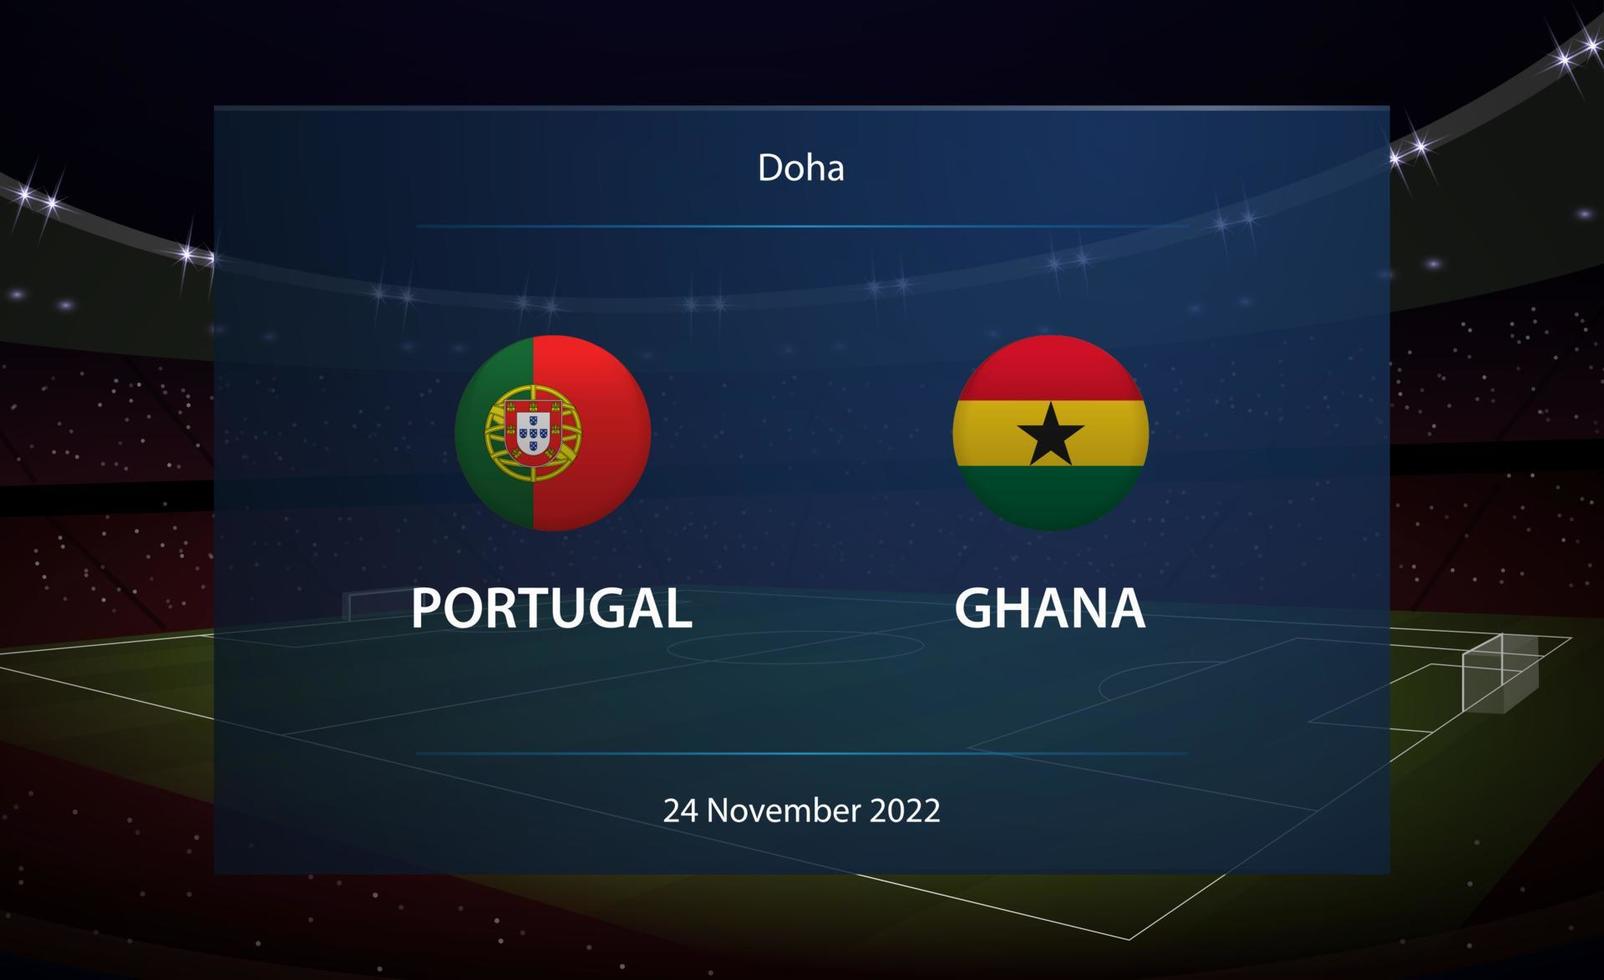 le Portugal contre Ghana. Football tableau de bord diffuser graphique vecteur